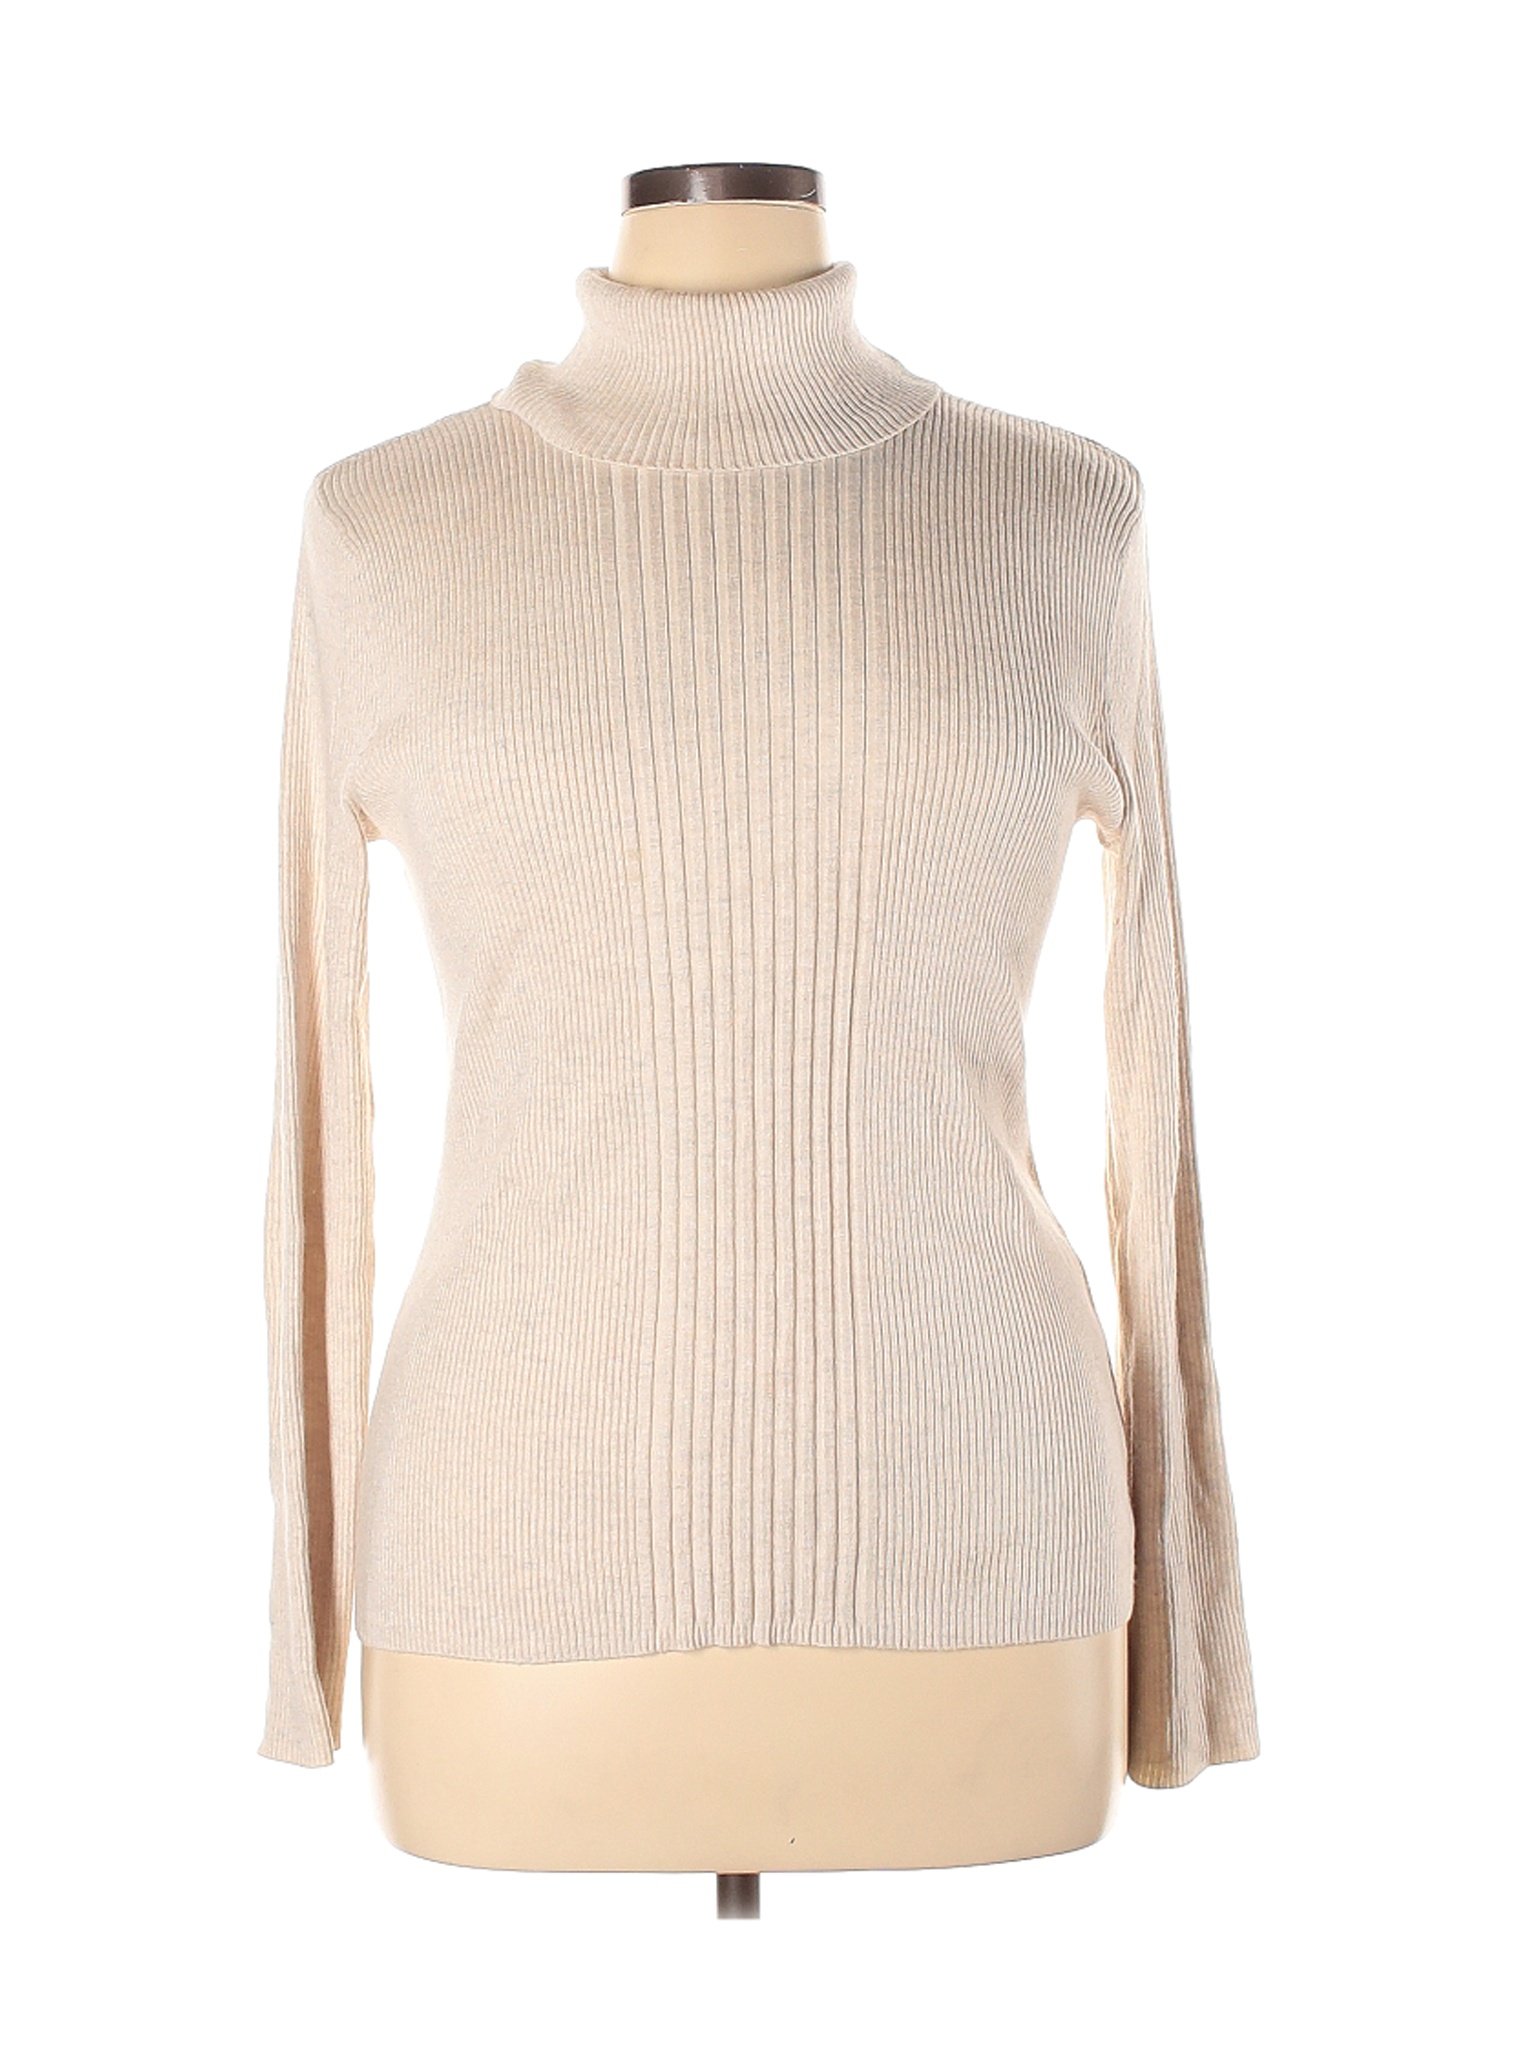 United States Sweaters Women Brown Turtleneck Sweater XL | eBay